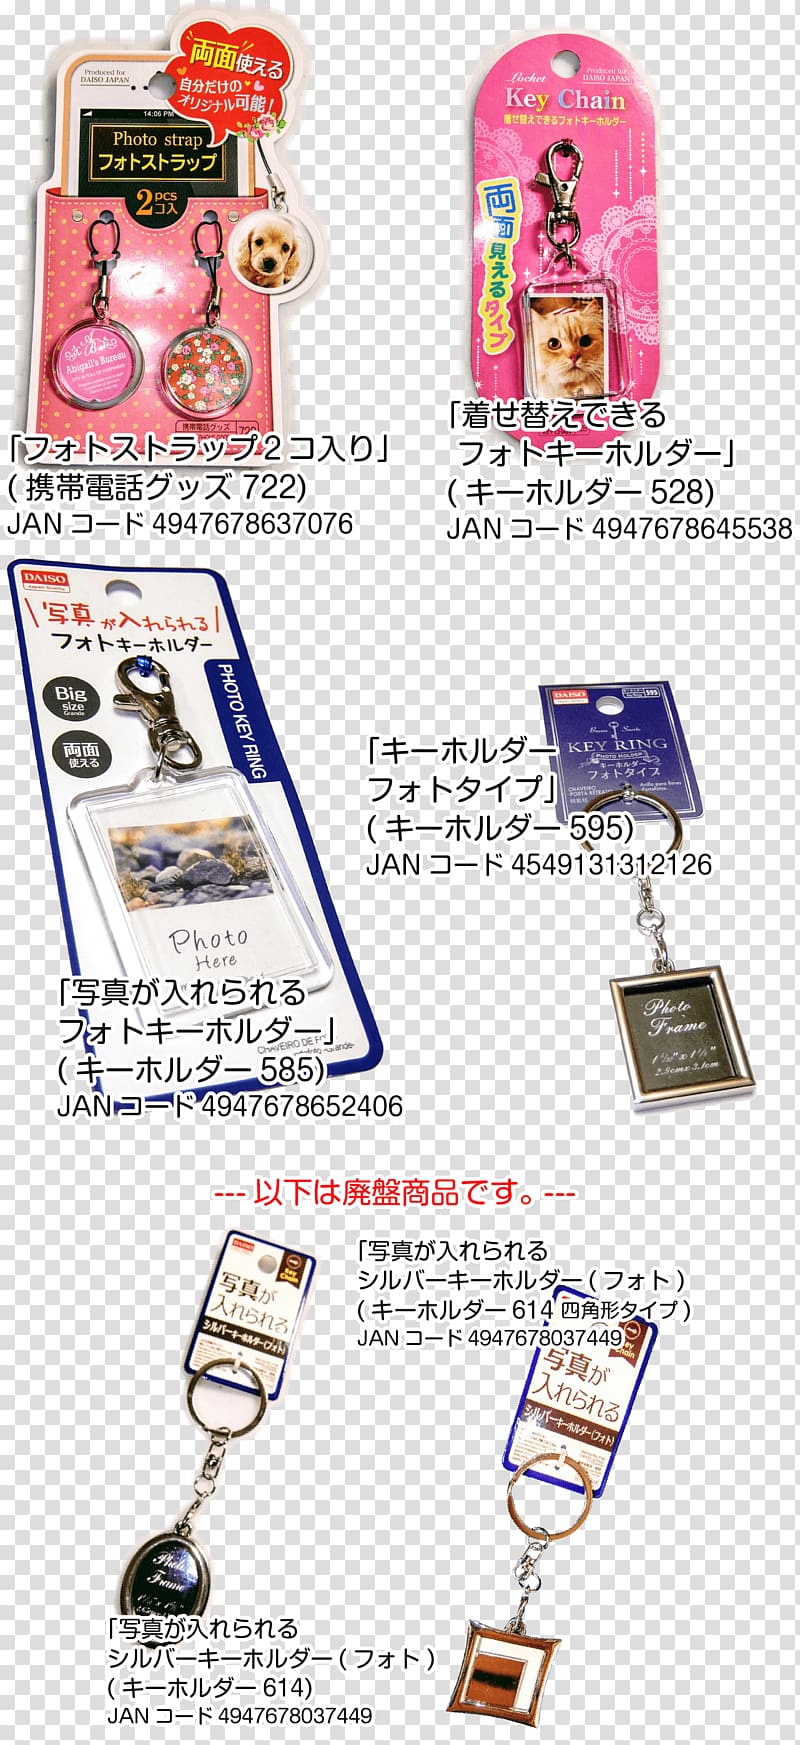 Daiso 100-yen shop パソコン教室・デジタルプラザ キュリオステーション志木店 Key Chains , key holder transparent background PNG clipart